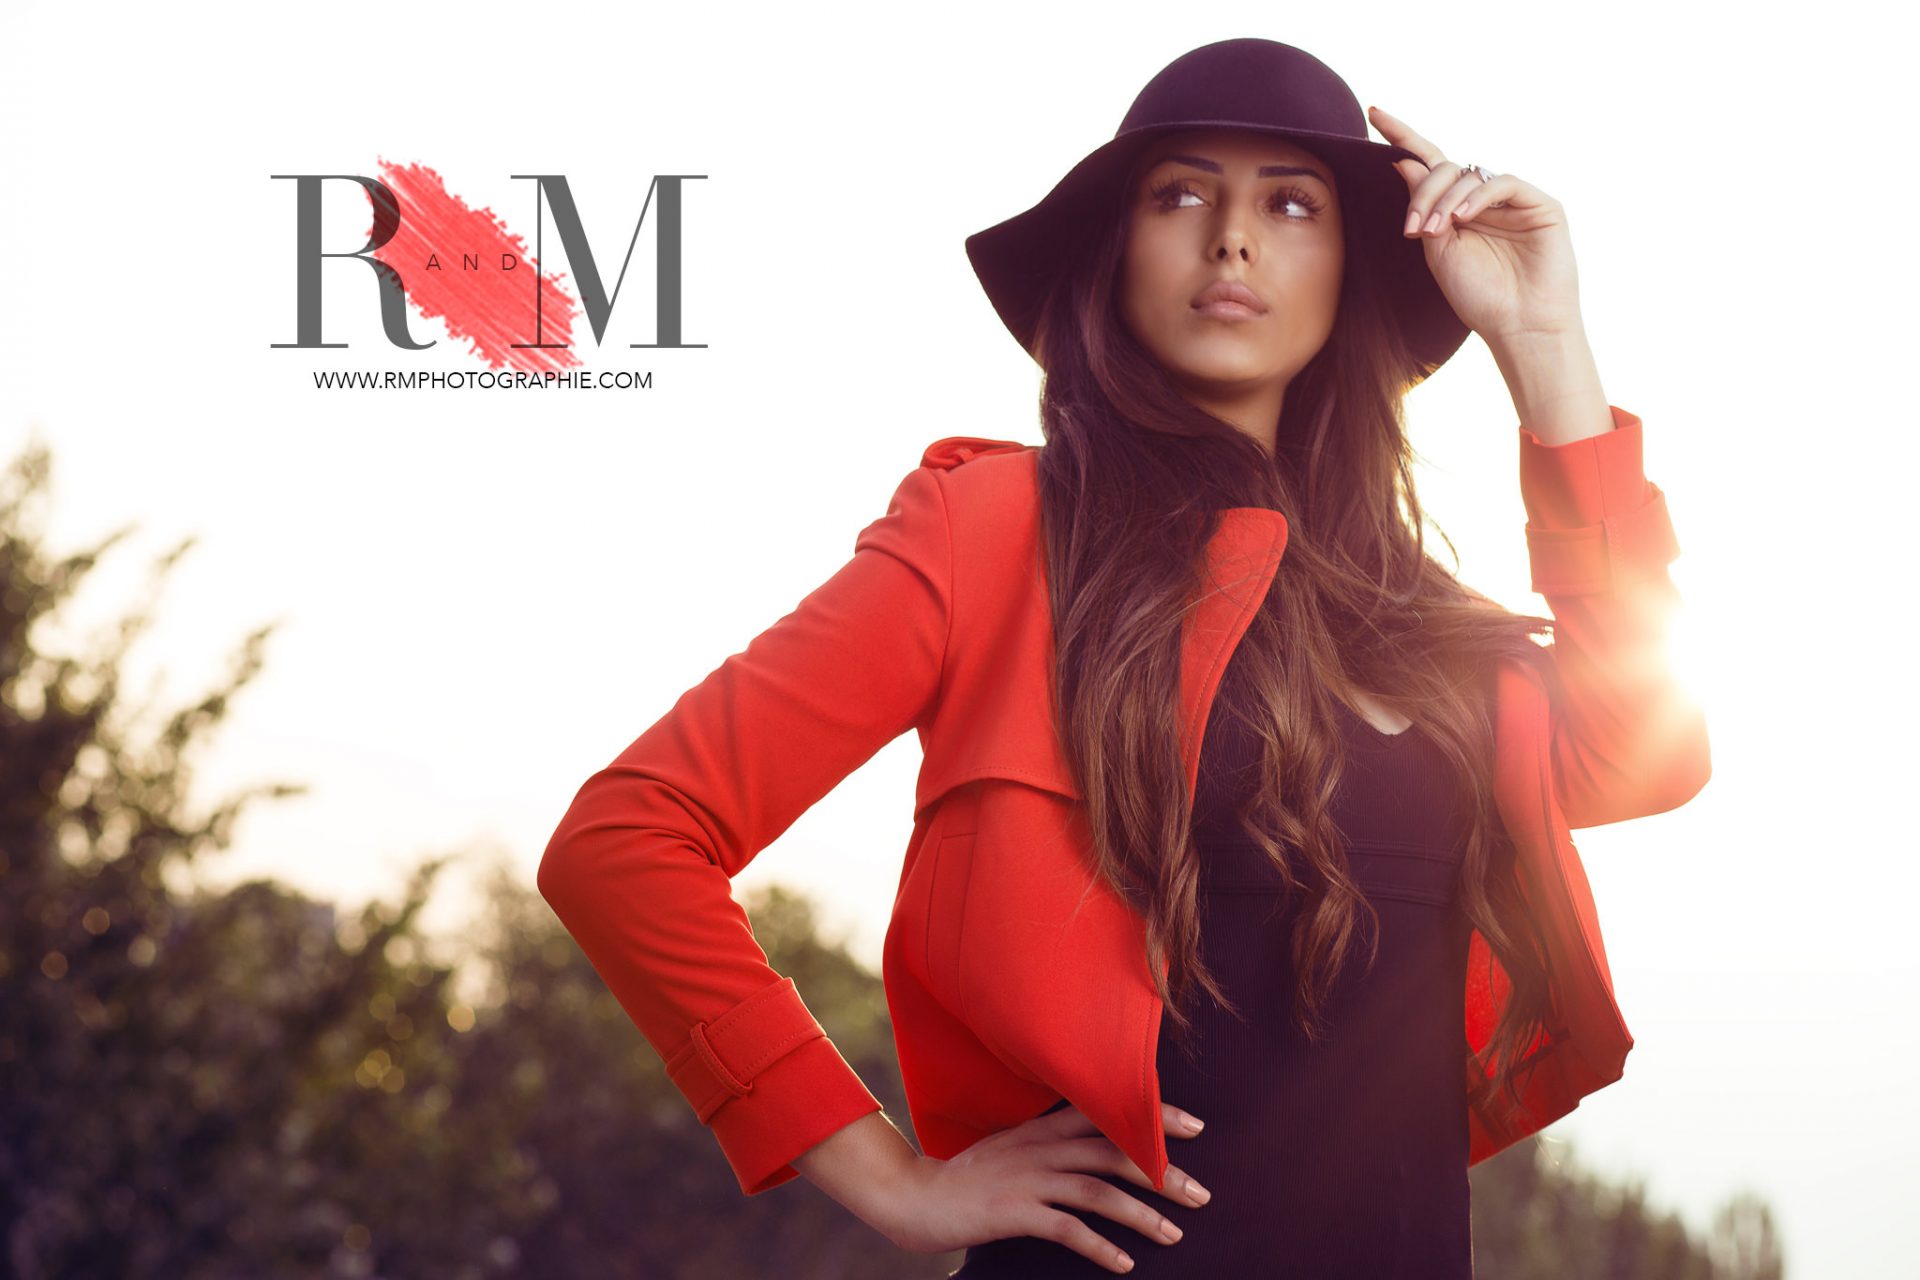 rmphotographie-fashion-photographer-photographe-mode-paris-book-photo-model-modele-class-red-hat-jacket-rouge